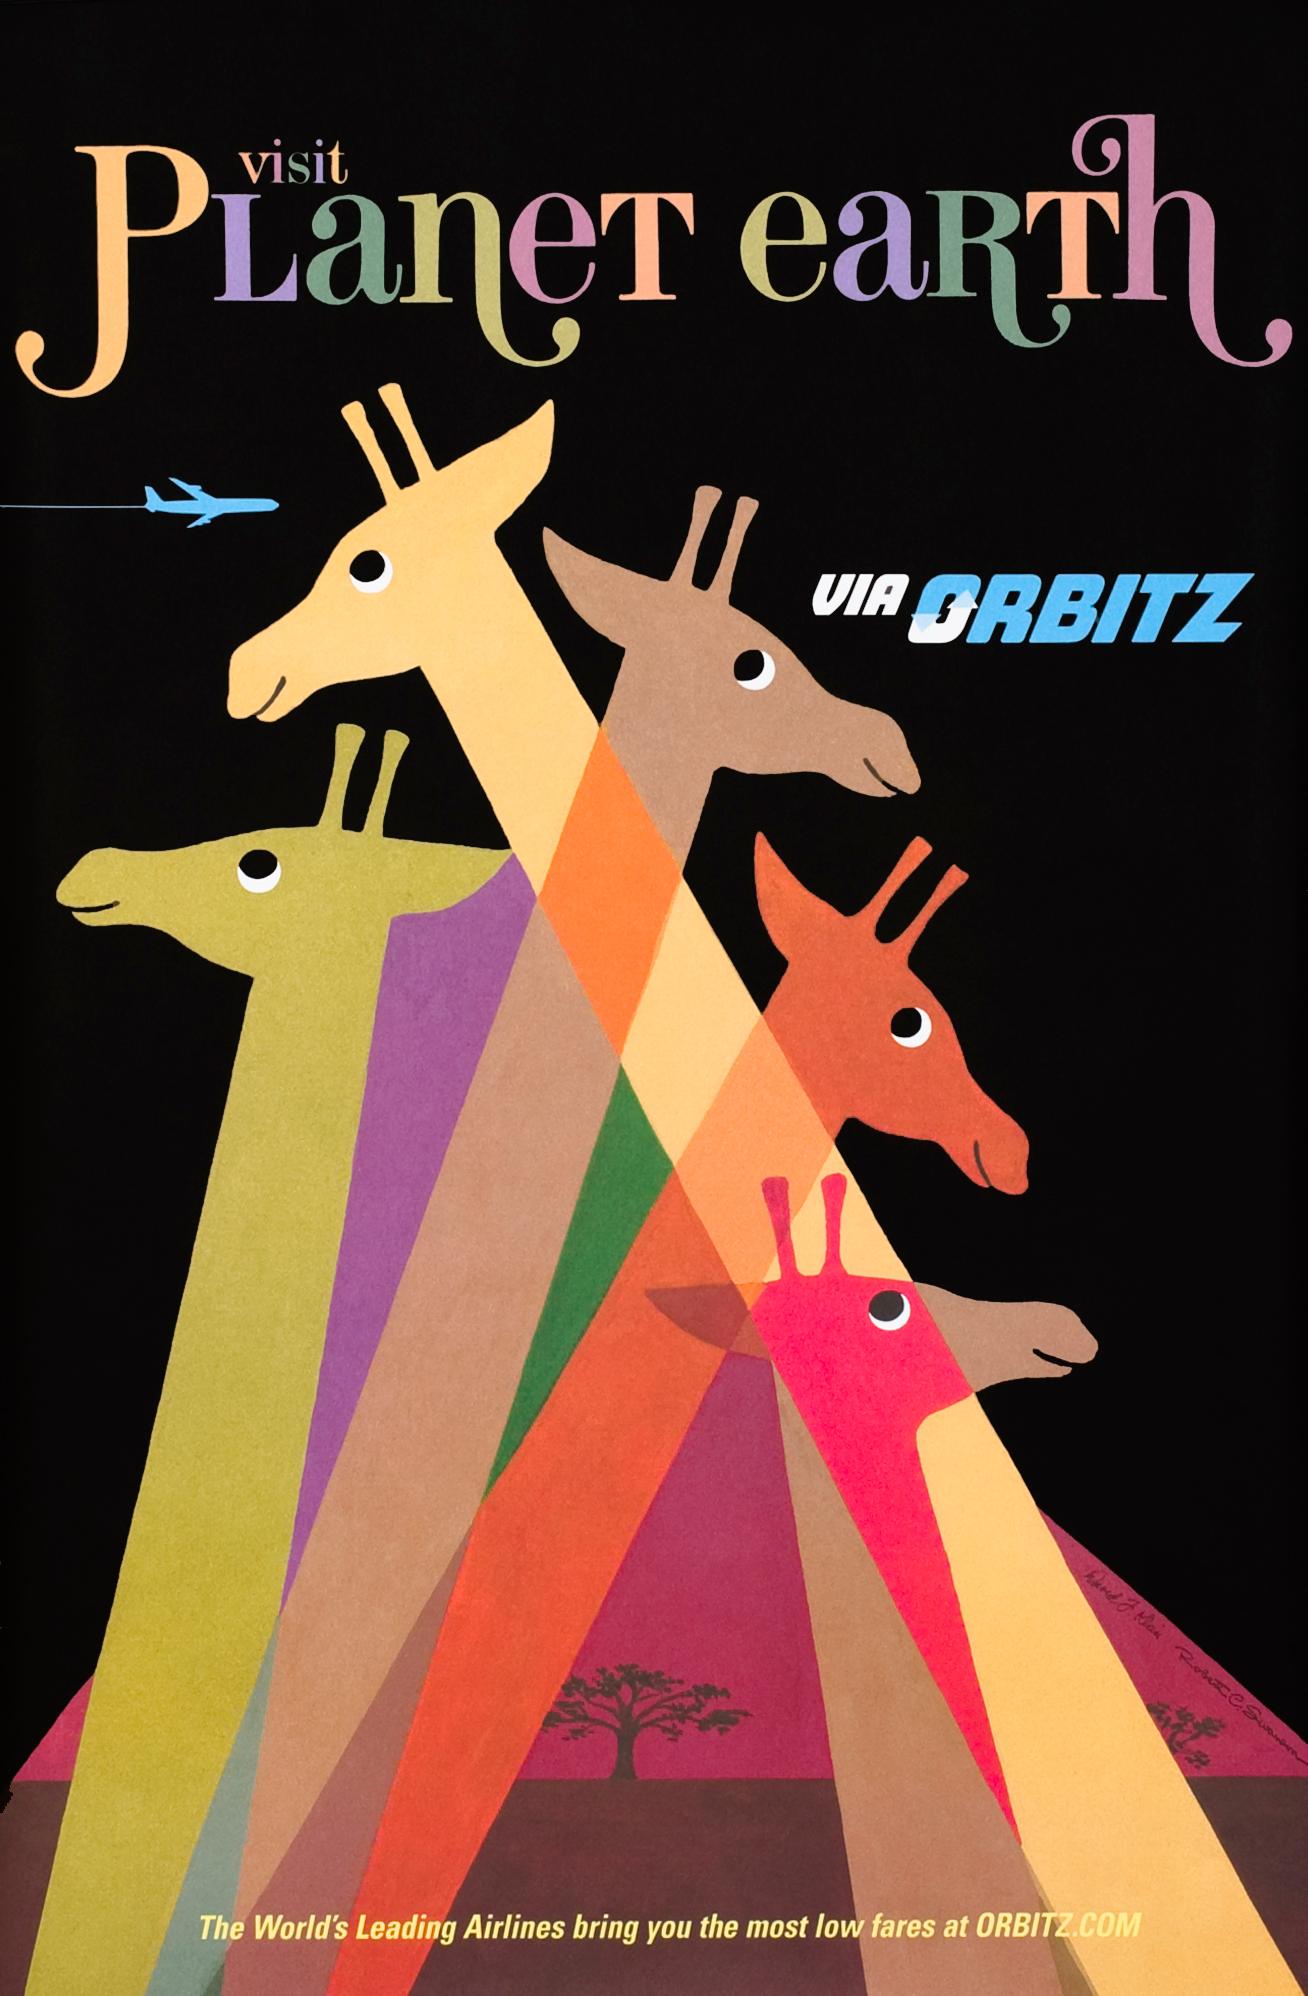 David Klein Animal Print - "Visit Planet Earth via Orbitz (Africa)" Original Travel Poster